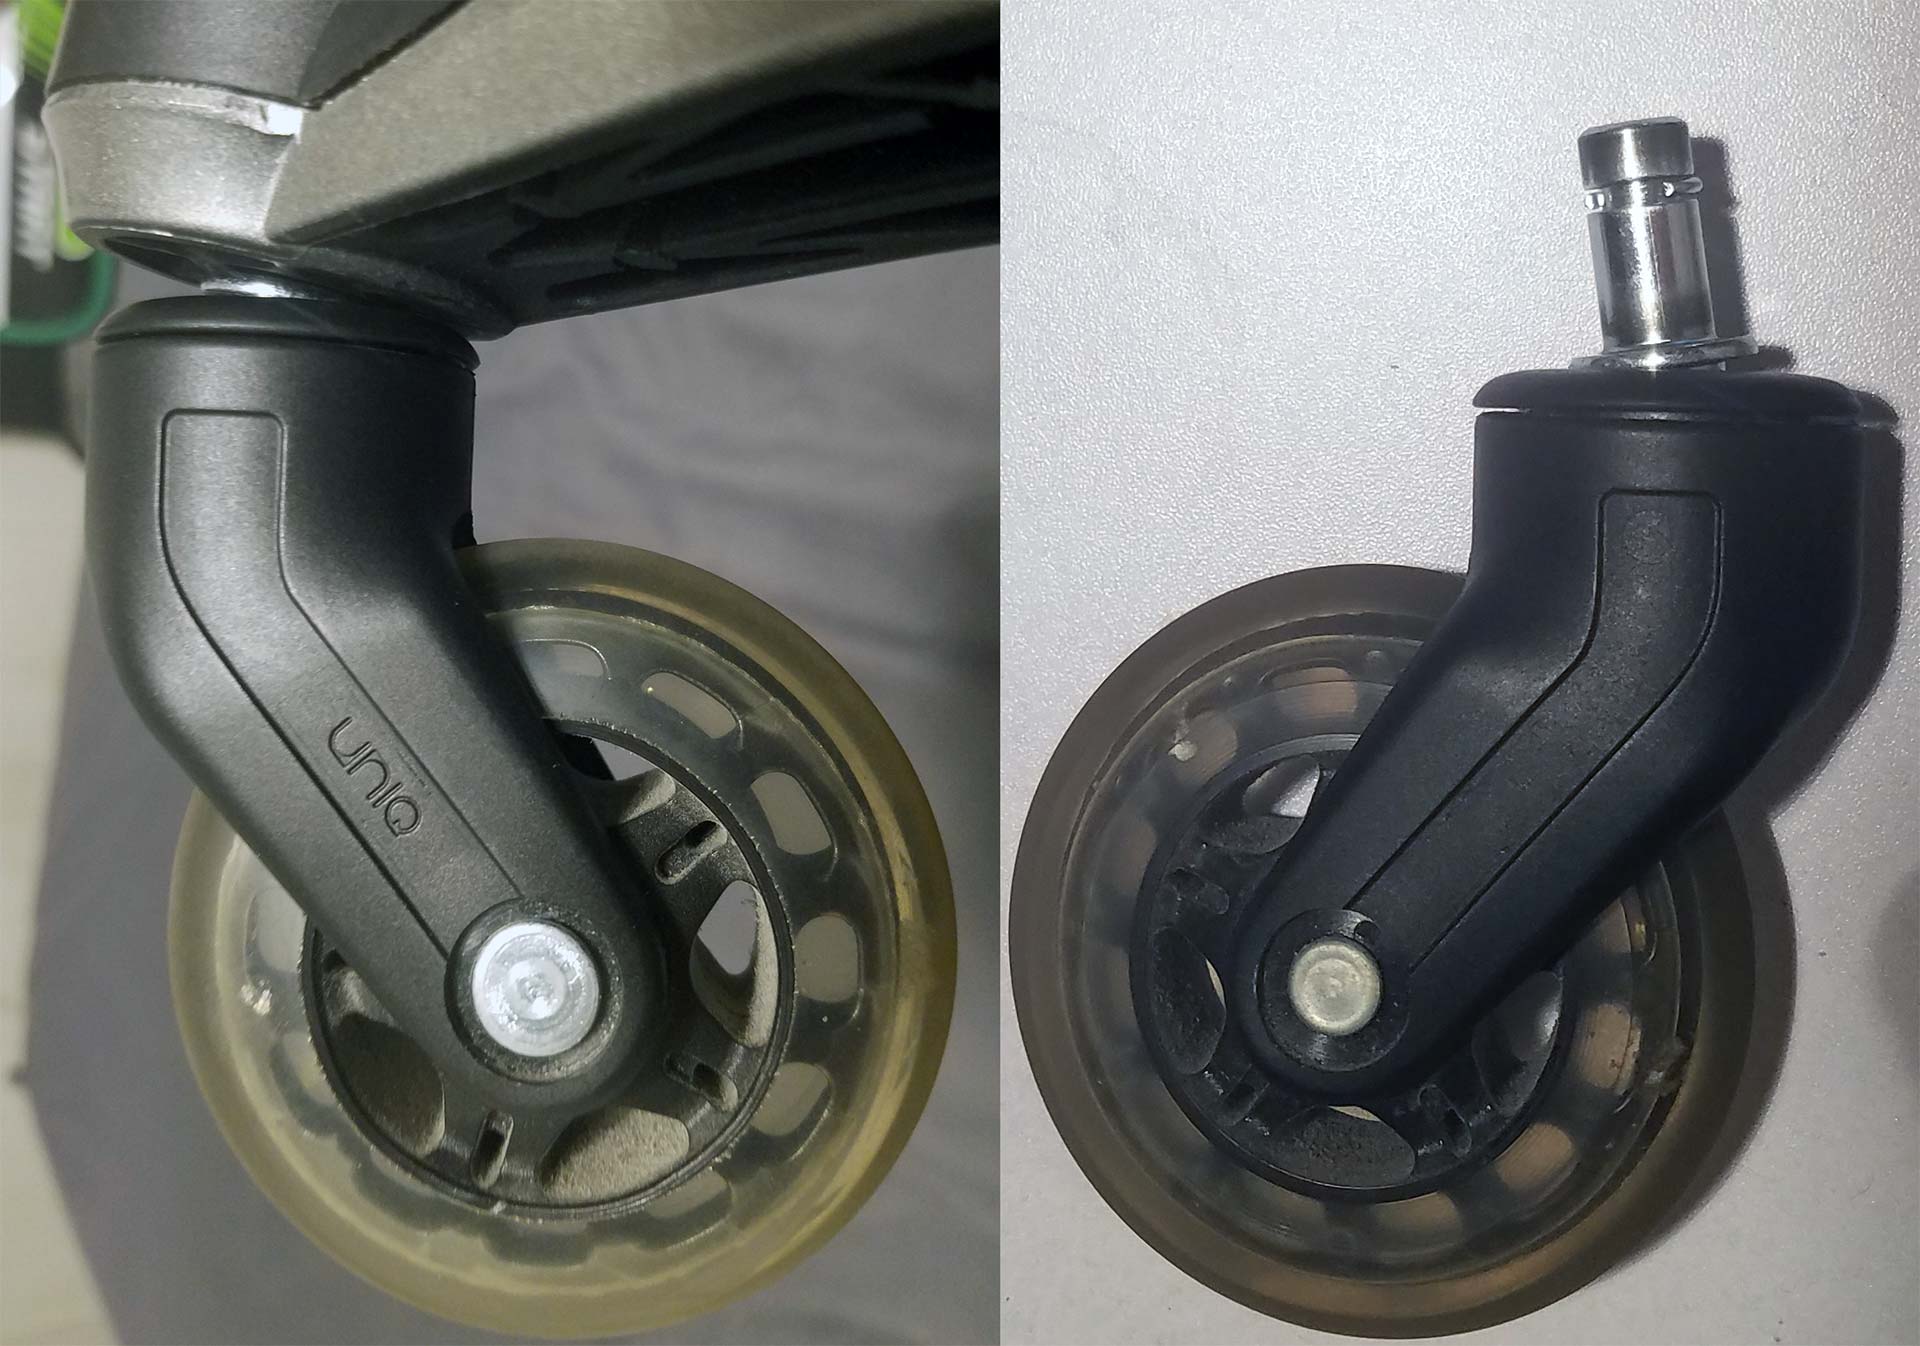 Bent chair stems - uniq wheels damage report.